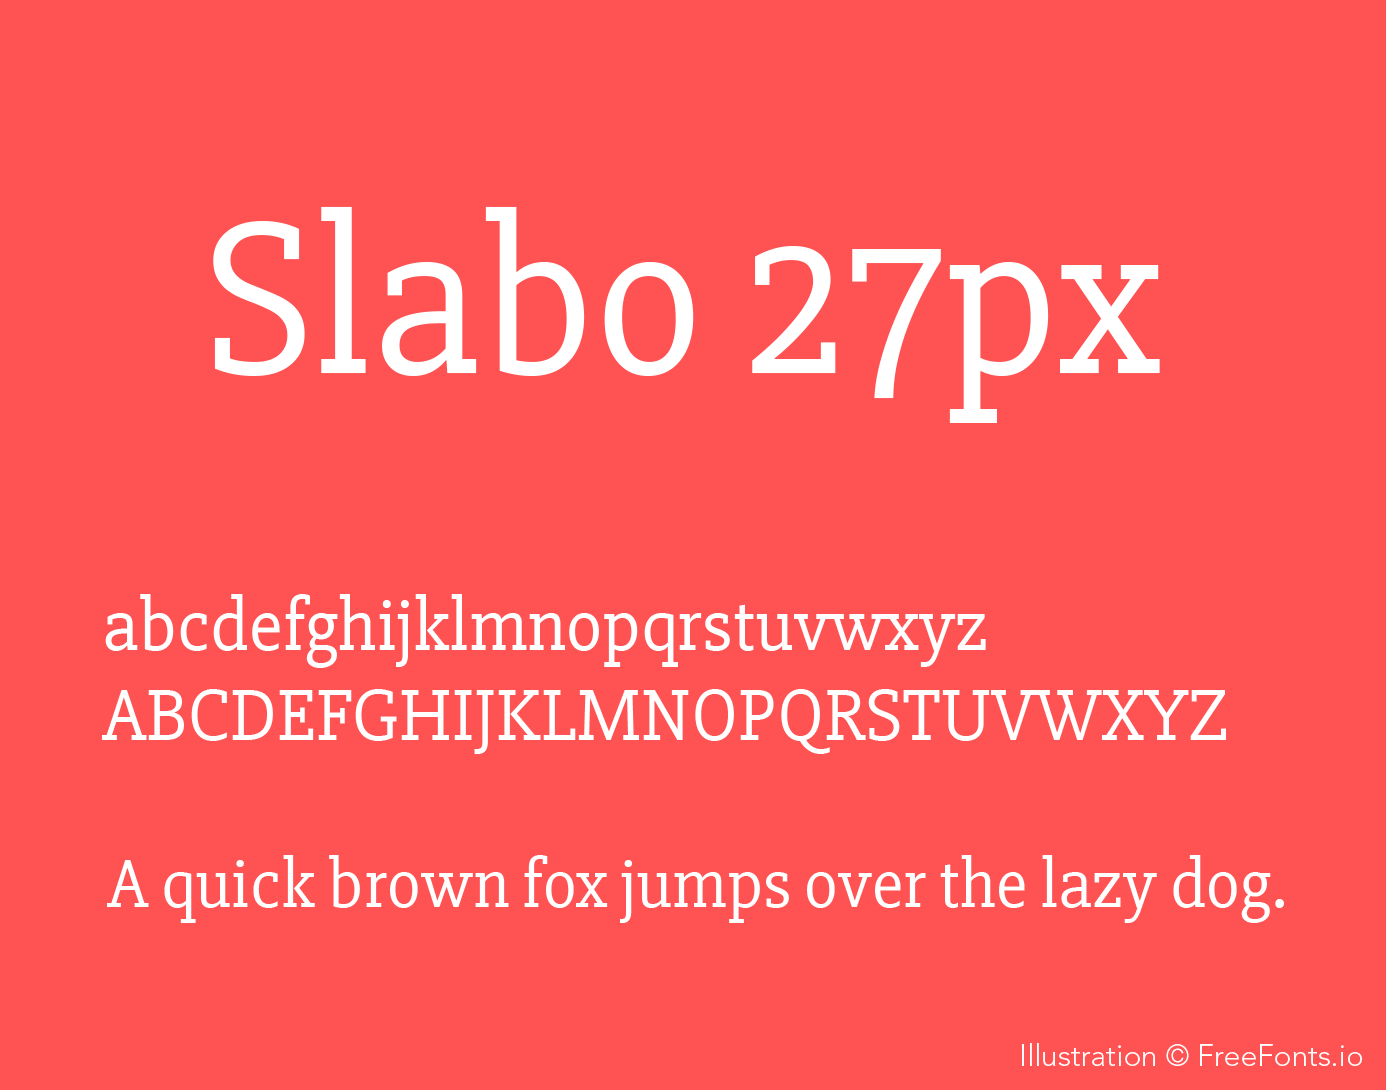 Example font Slabo 27px #1